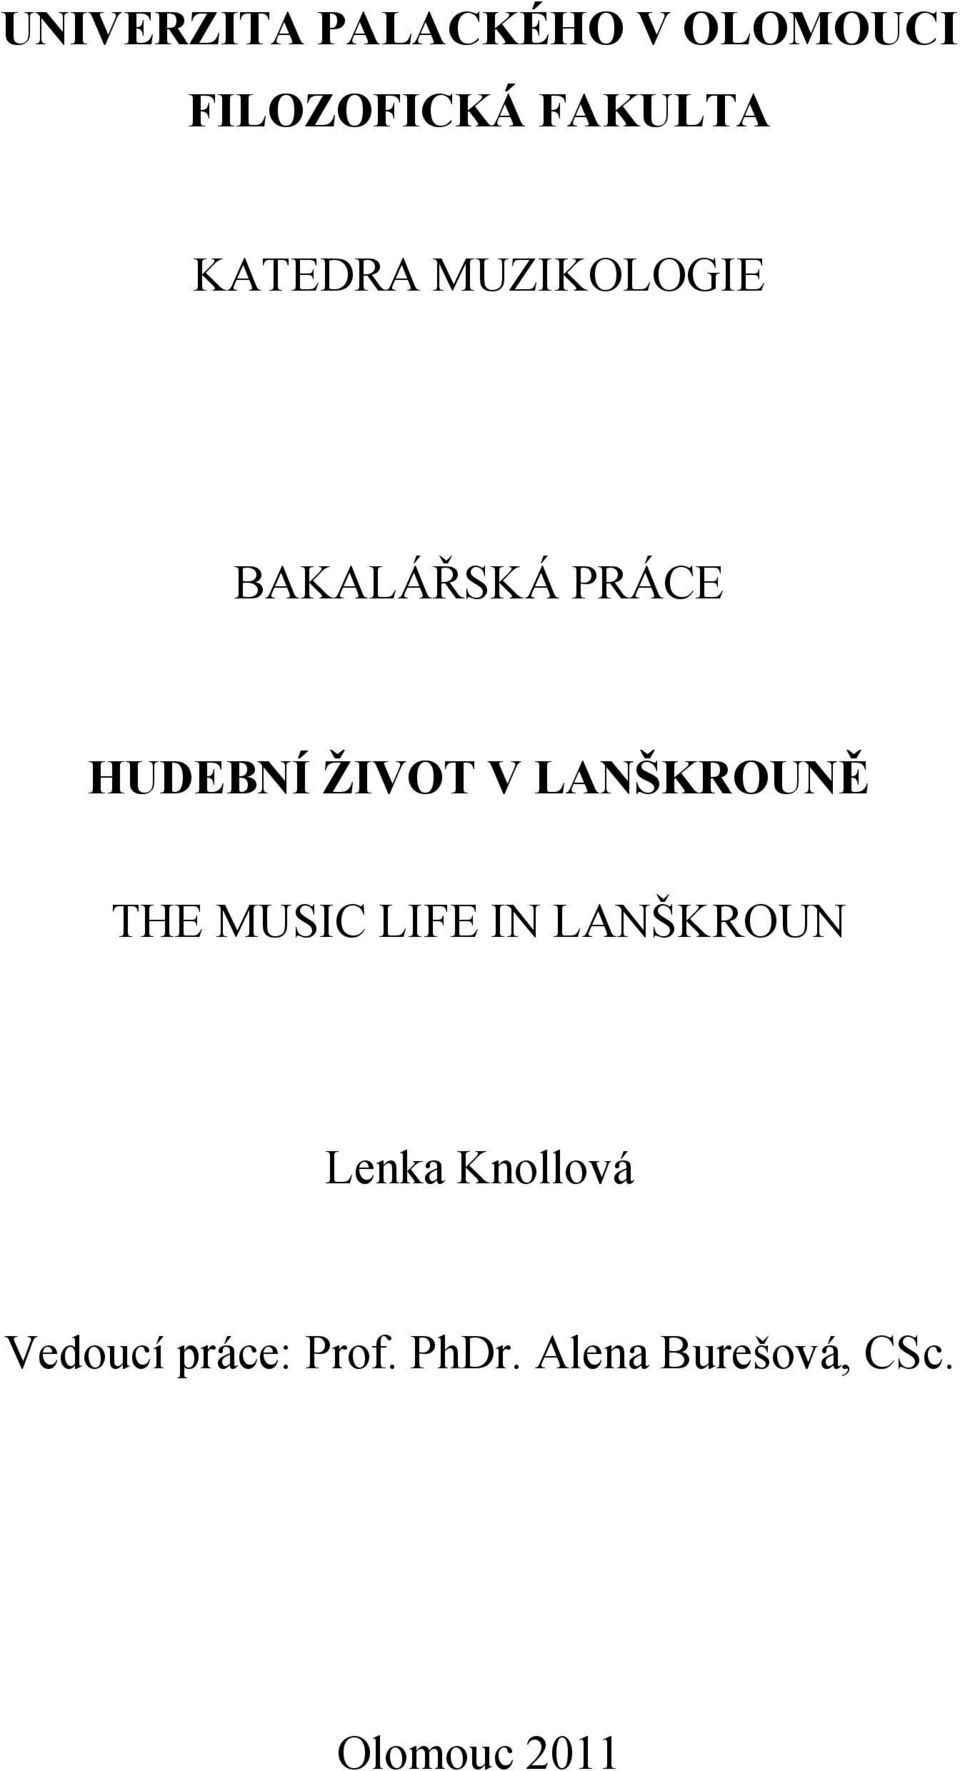 LANŠKROUNĚ THE MUSIC LIFE IN LANŠKROUN Lenka Knollová